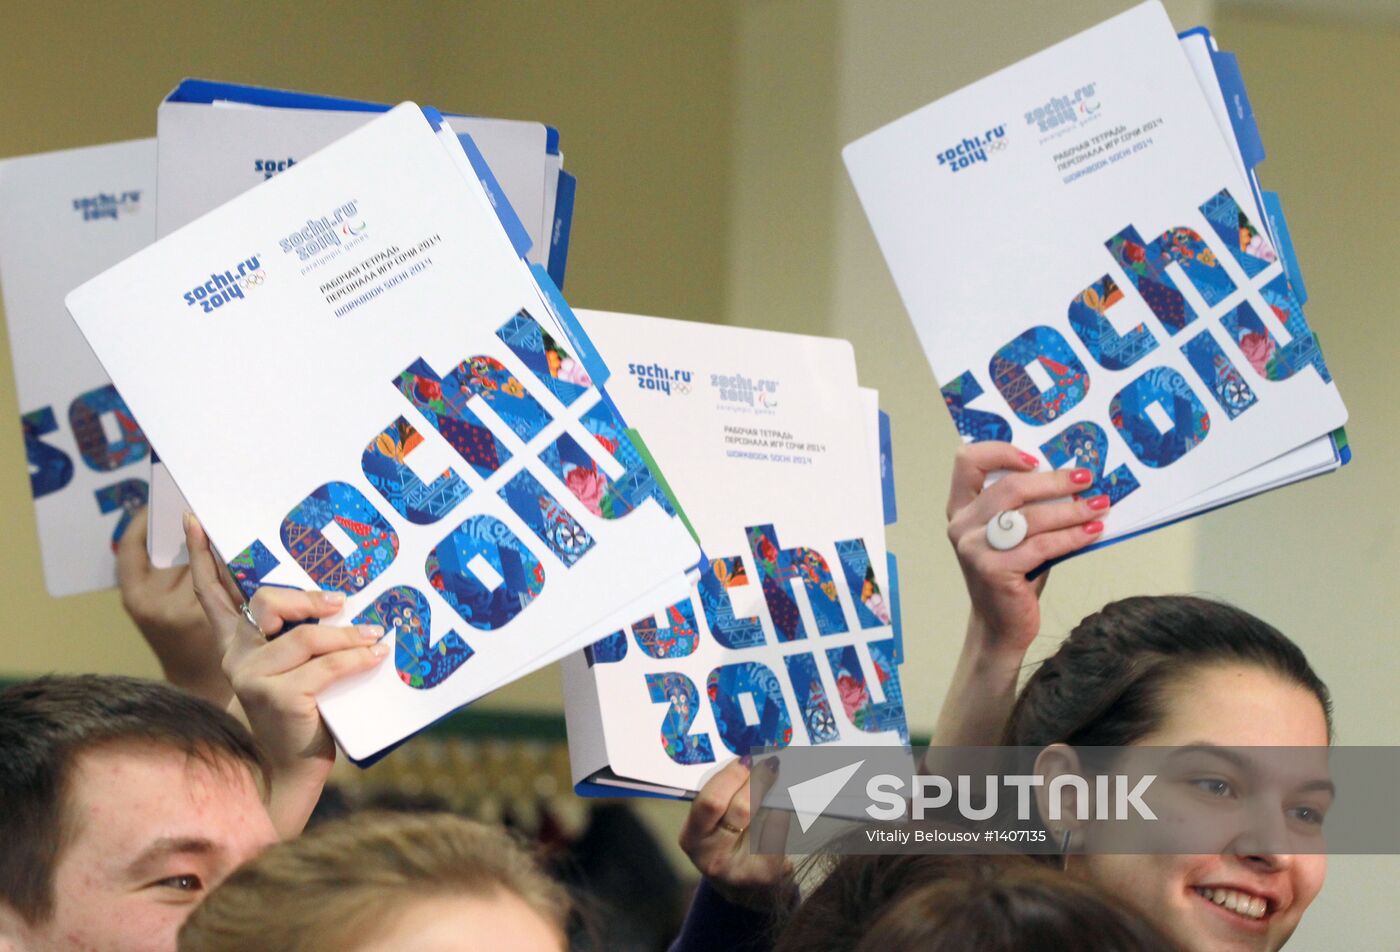 Sochi 2014 volunteers training starts